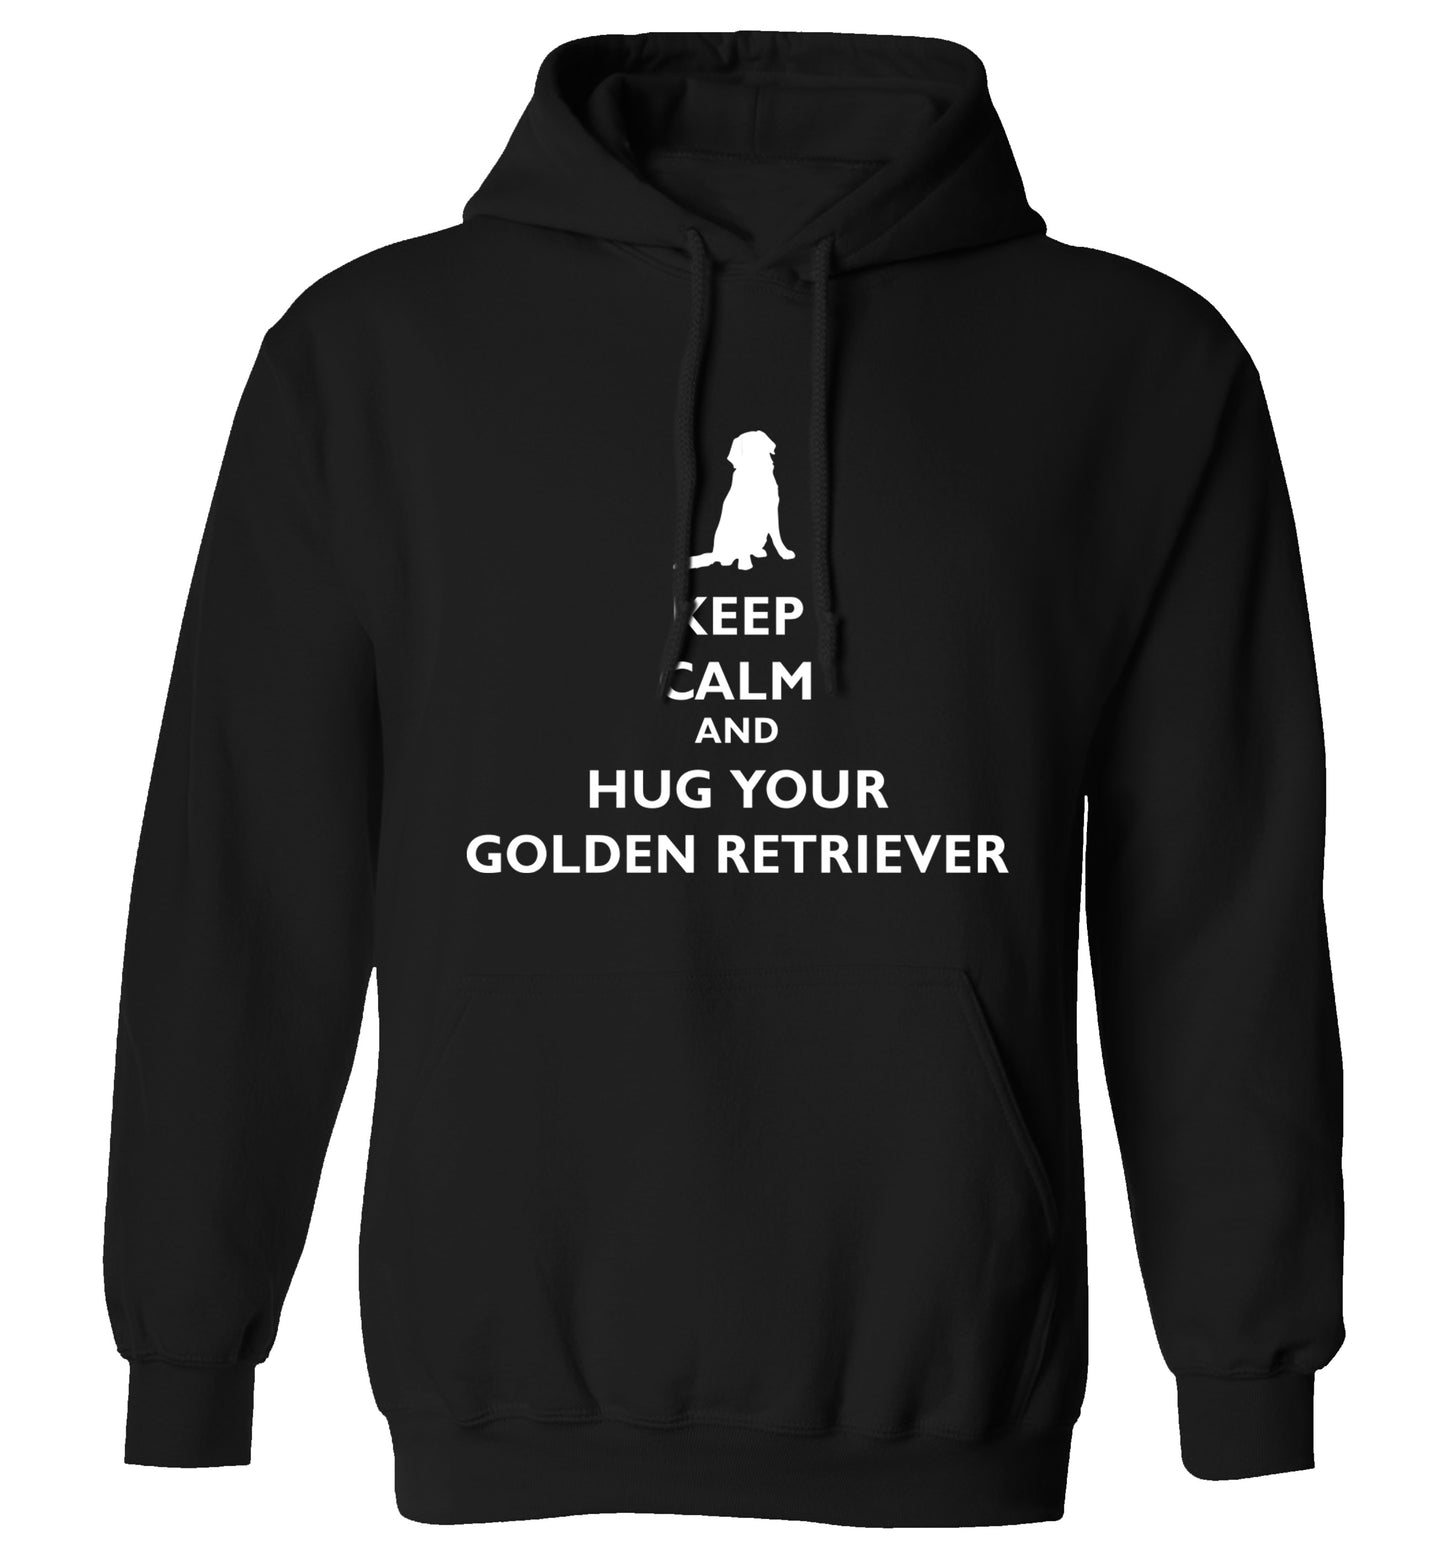 Keep calm and hug your golden retriever adults unisex black hoodie 2XL